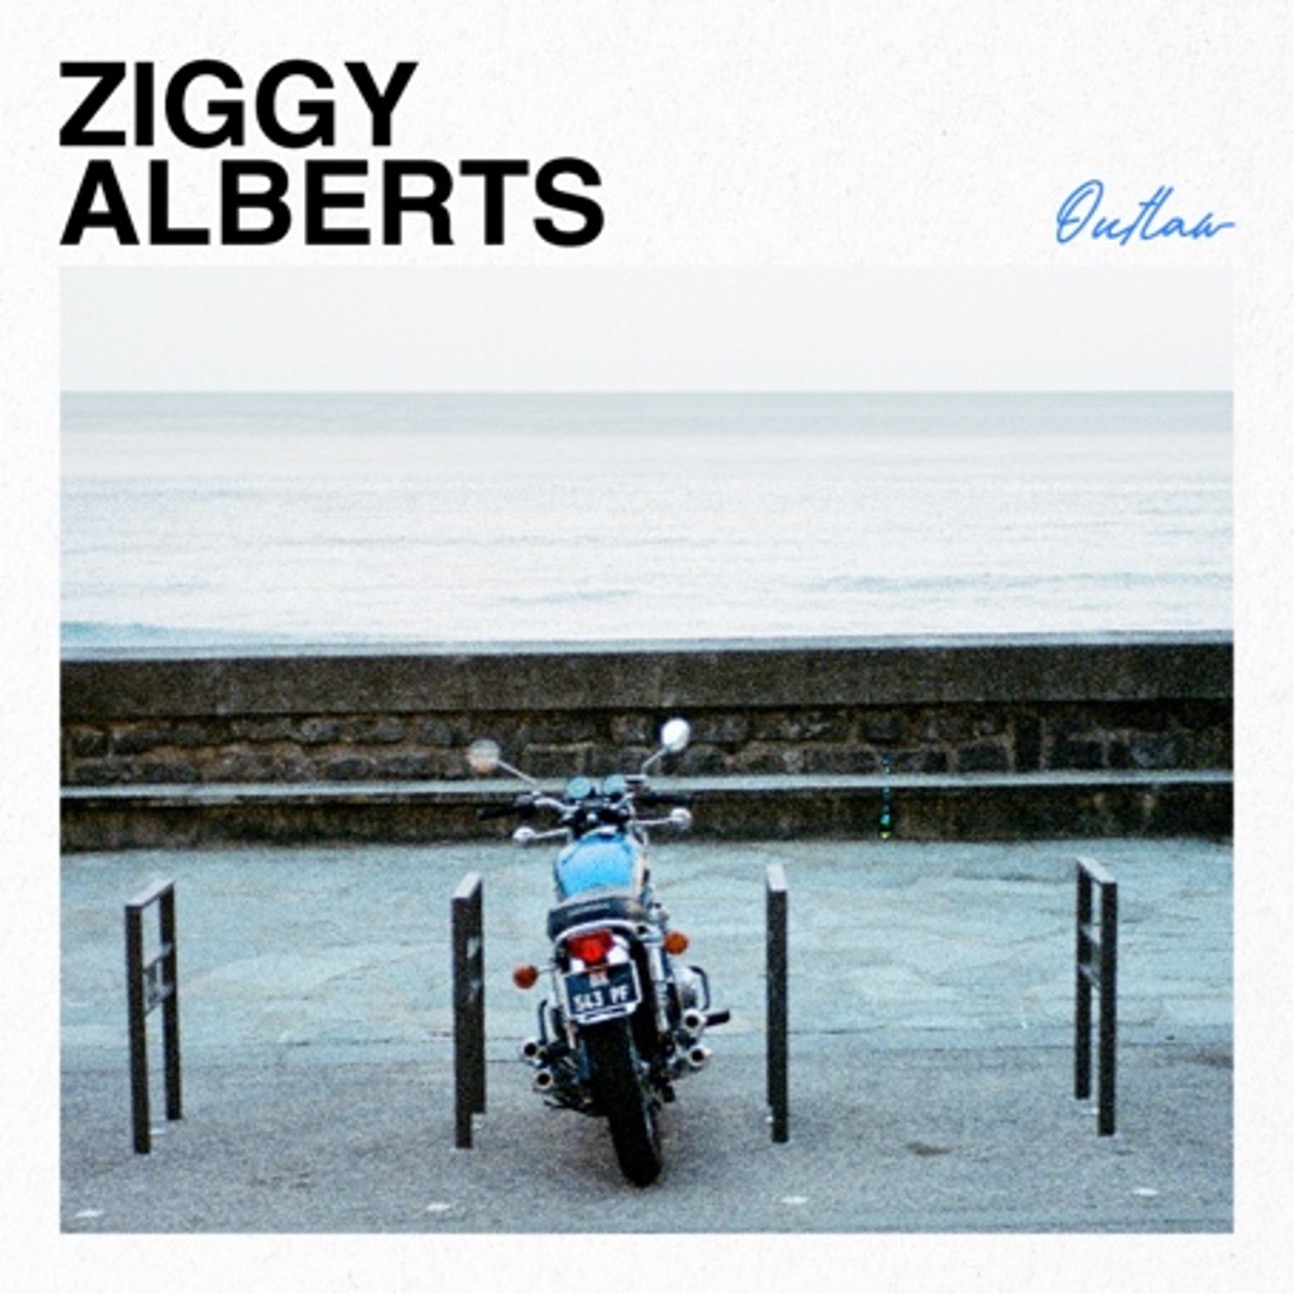 Ziggy Alberts lança novo single “Outlaw”